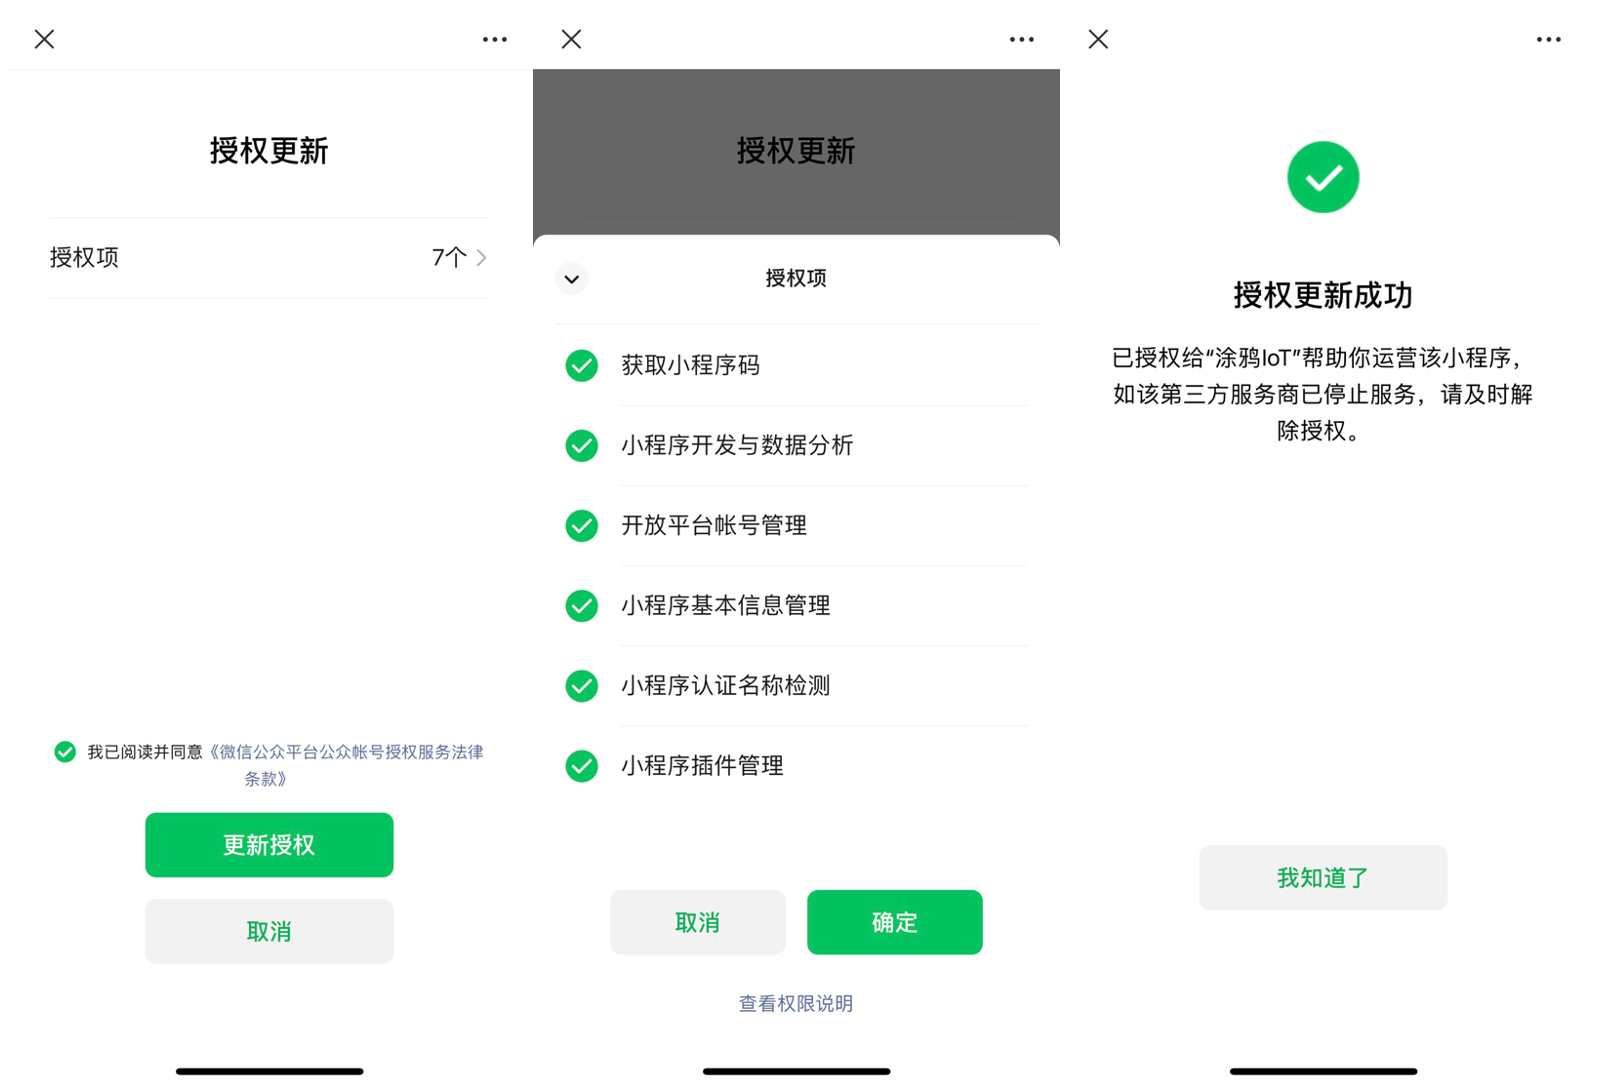 Authorize Access to WeChat Mini Program